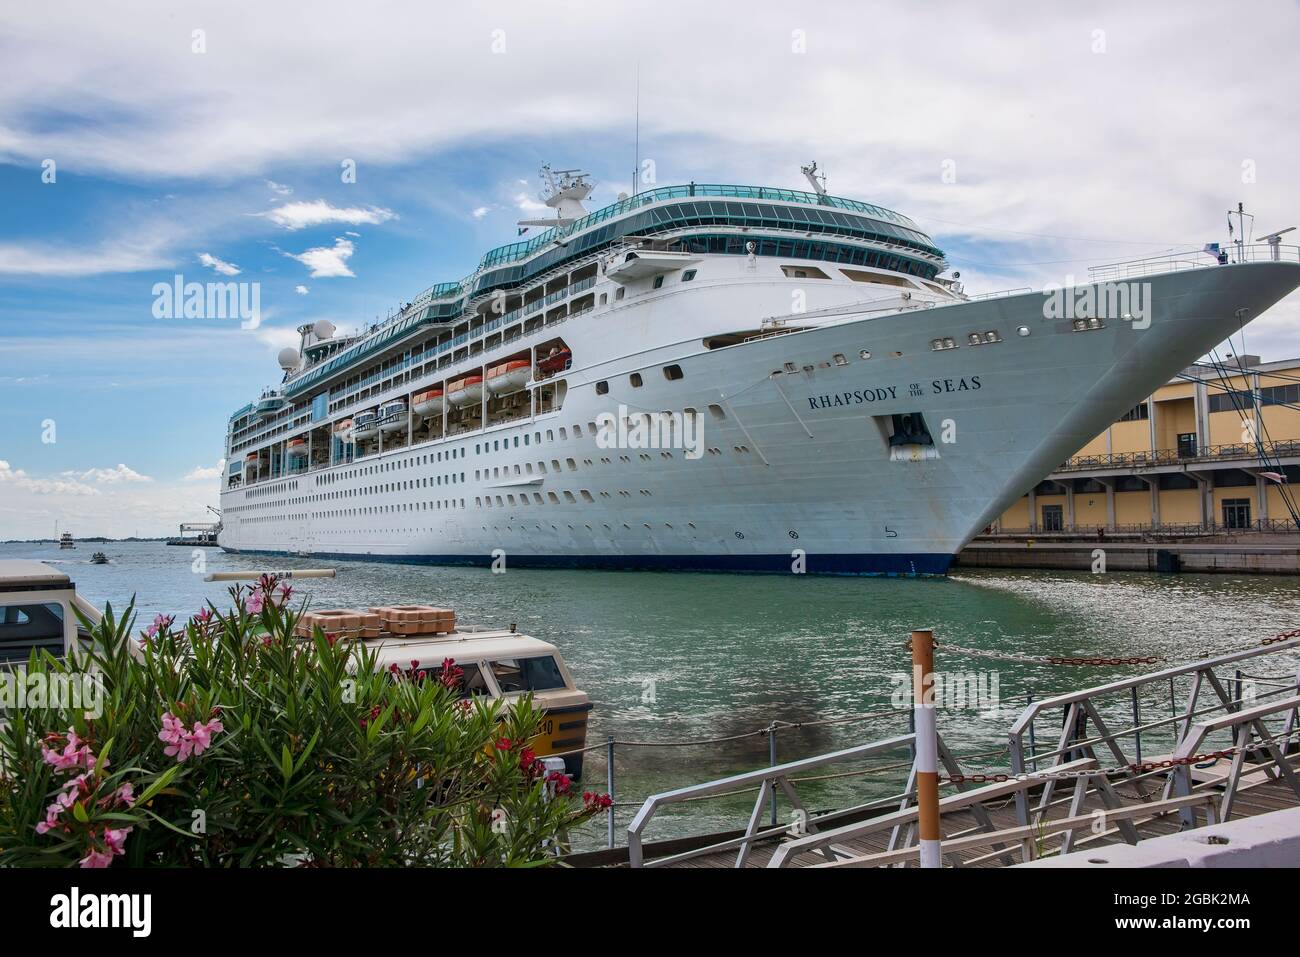 Venedig, Italien - 13. Juni 2016: Rhapsody of the Seas, Kreuzschiff aus der Royal Caribbean, vor Anker für den Tag in Port Venice, Italien. Stockfoto